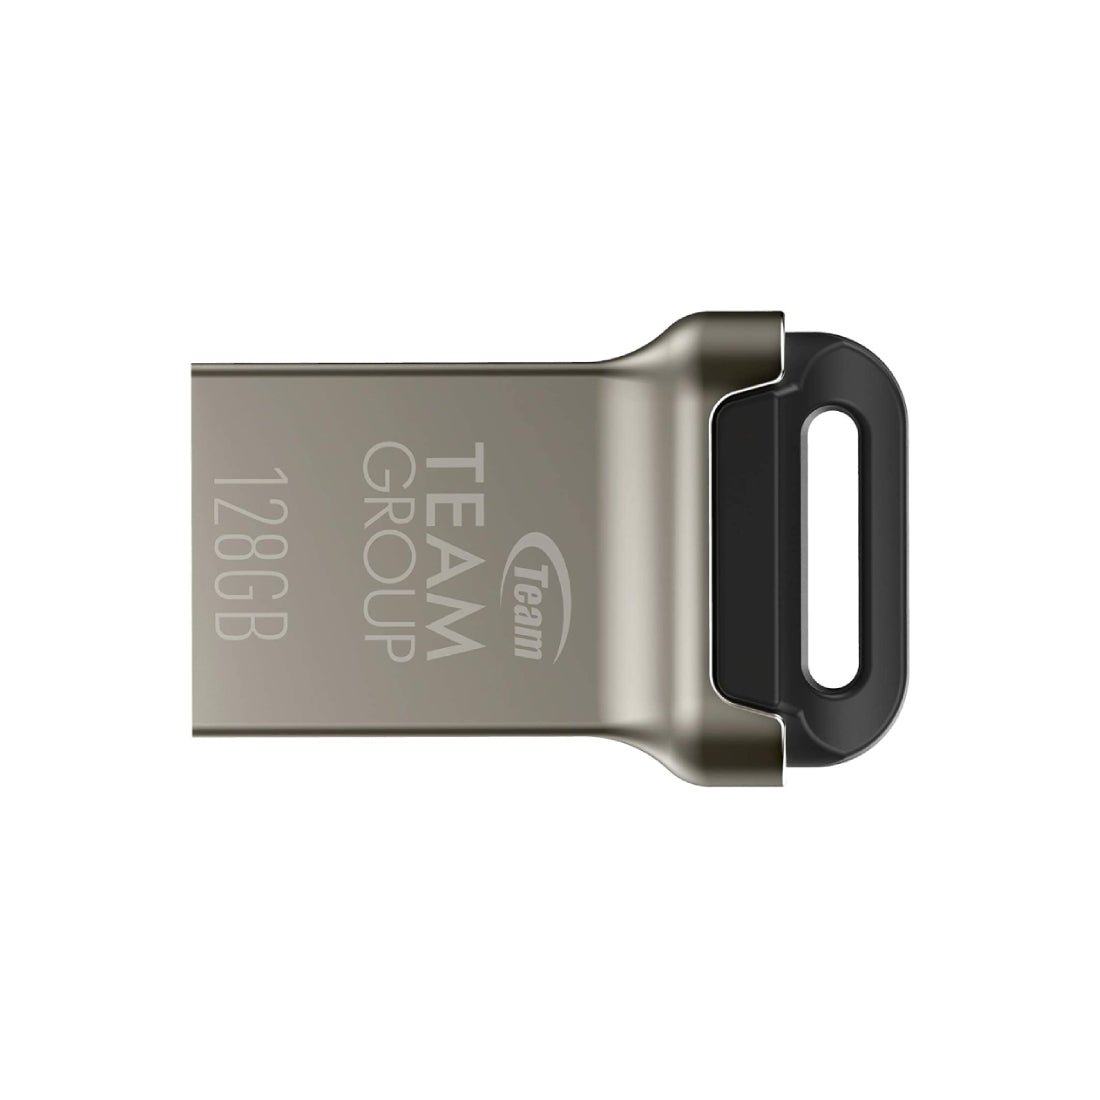 Team Group C162 128GB USB Flash Drive - Store 974 | ستور ٩٧٤